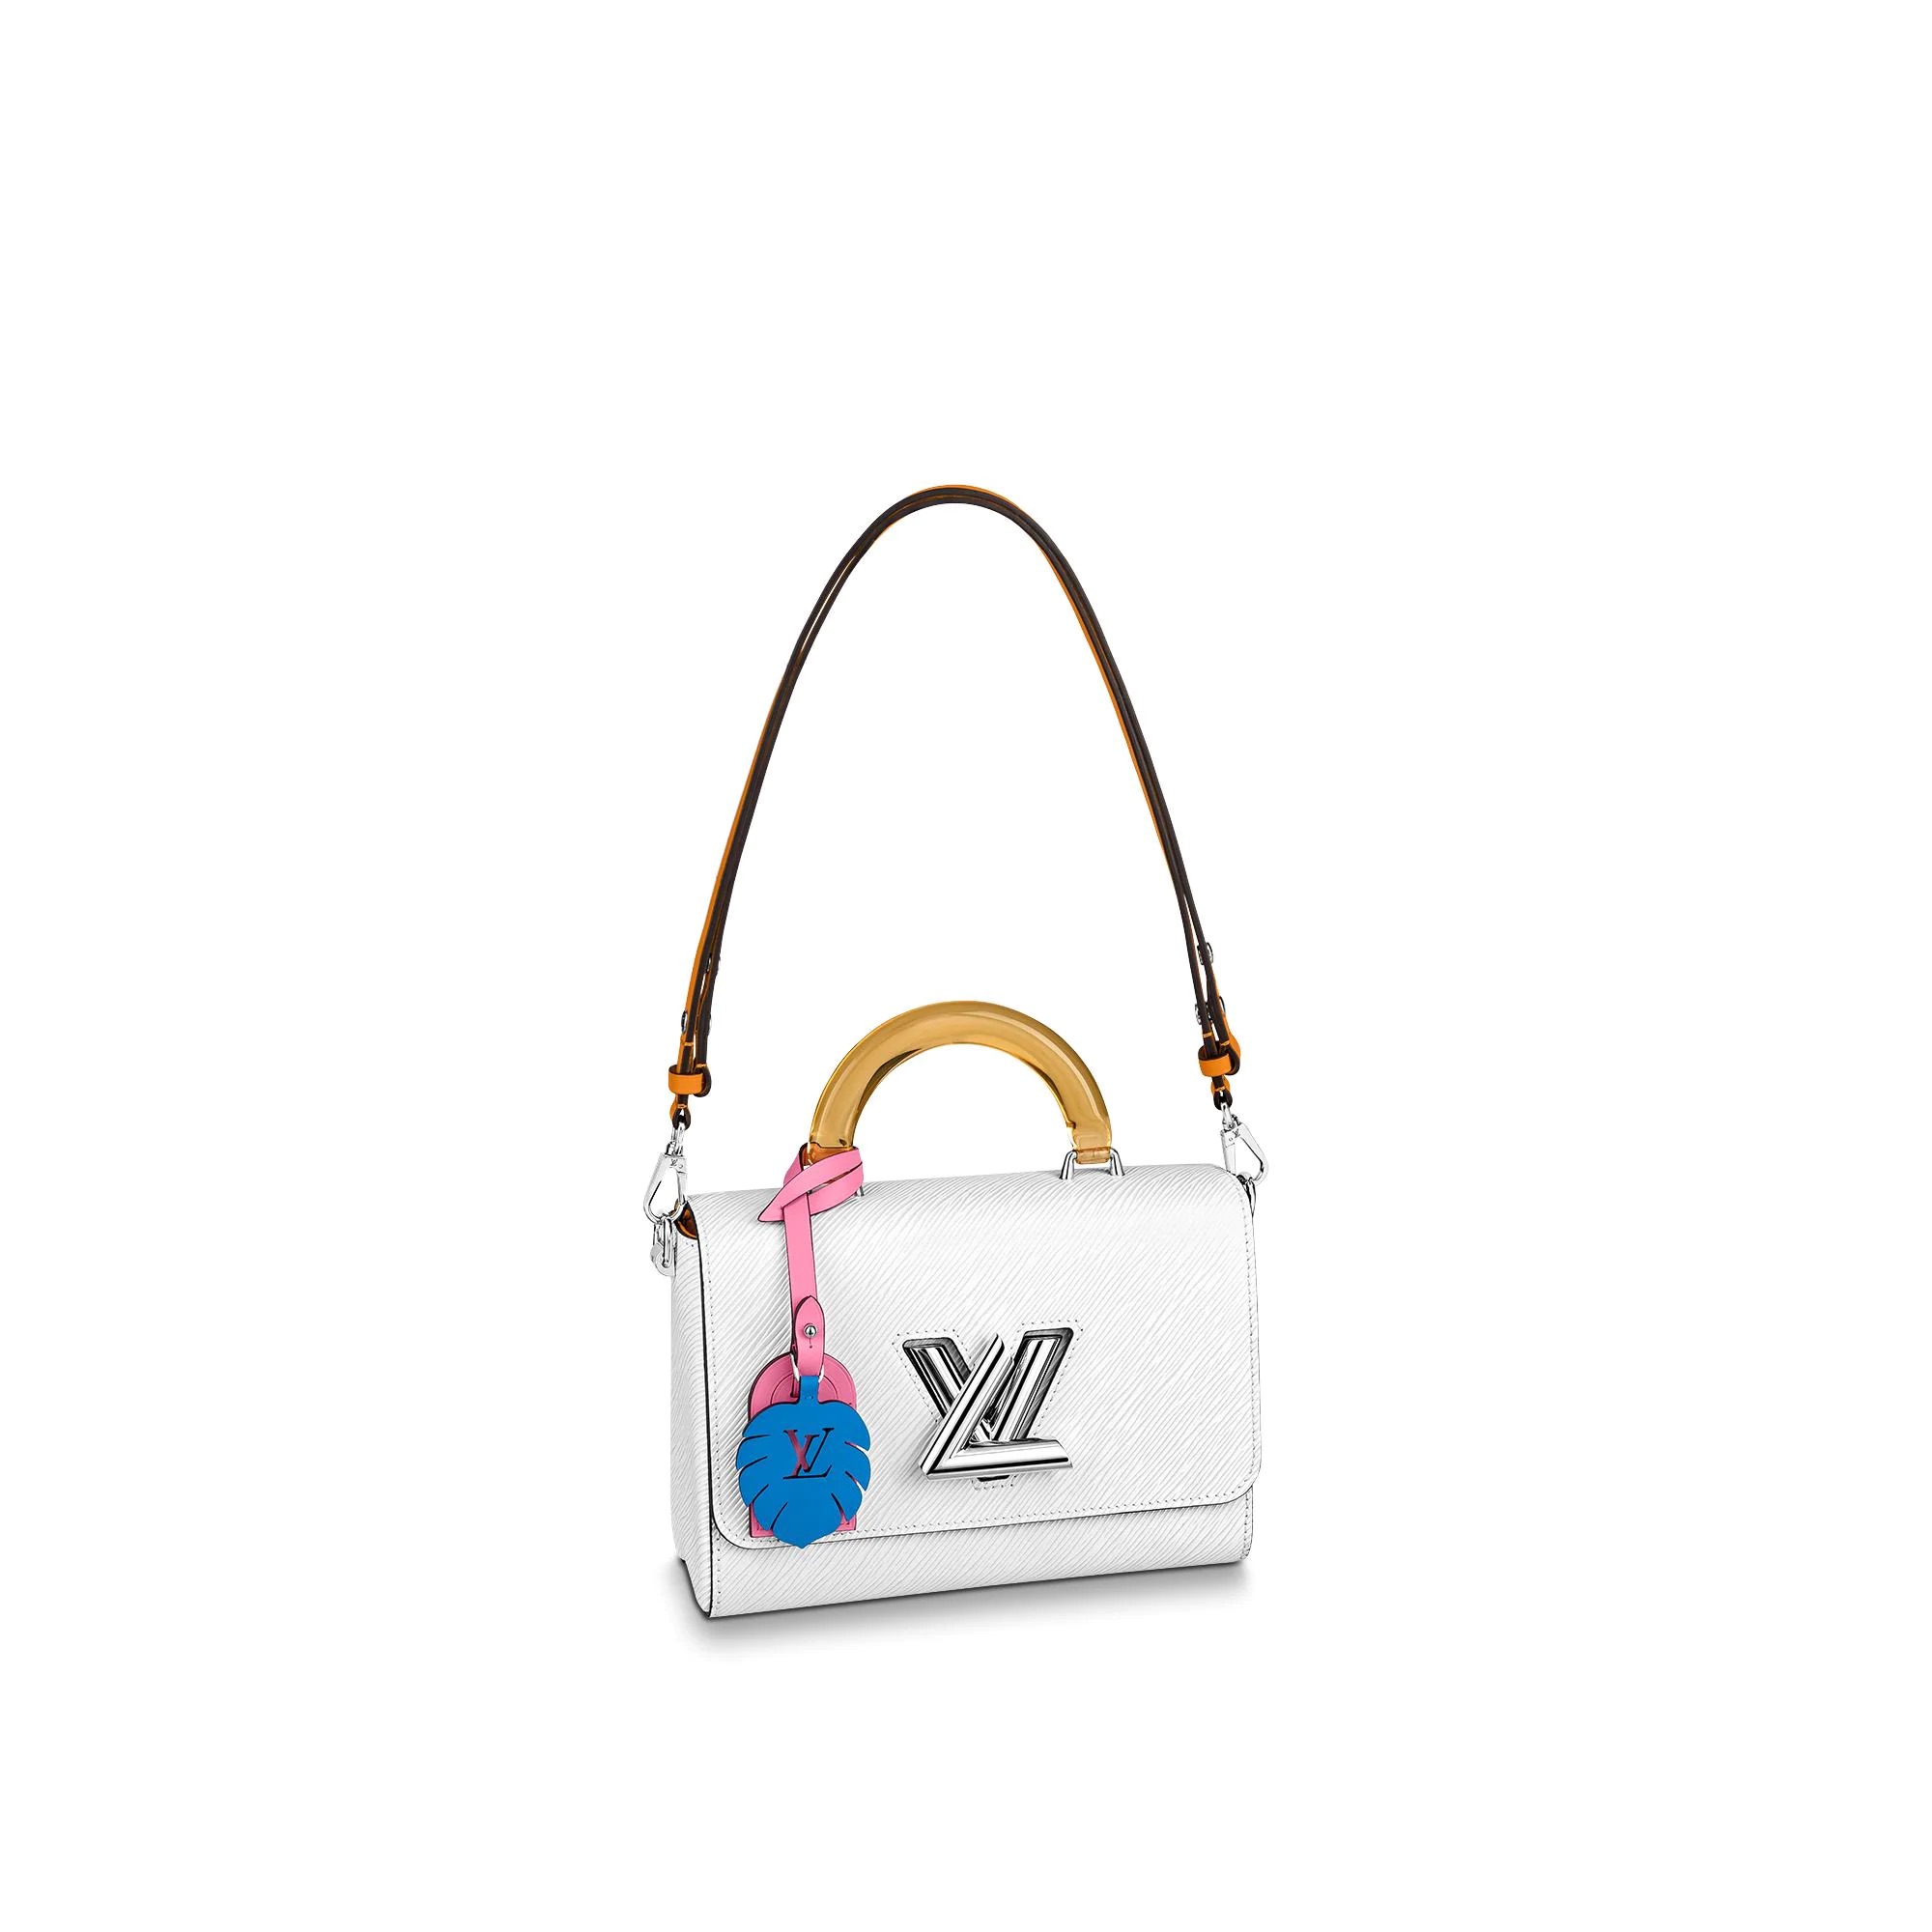 Kaia Gerber Fronts Louis Vuitton SS 2020 'Twist' Handbags Campaign — Anne  of Carversville